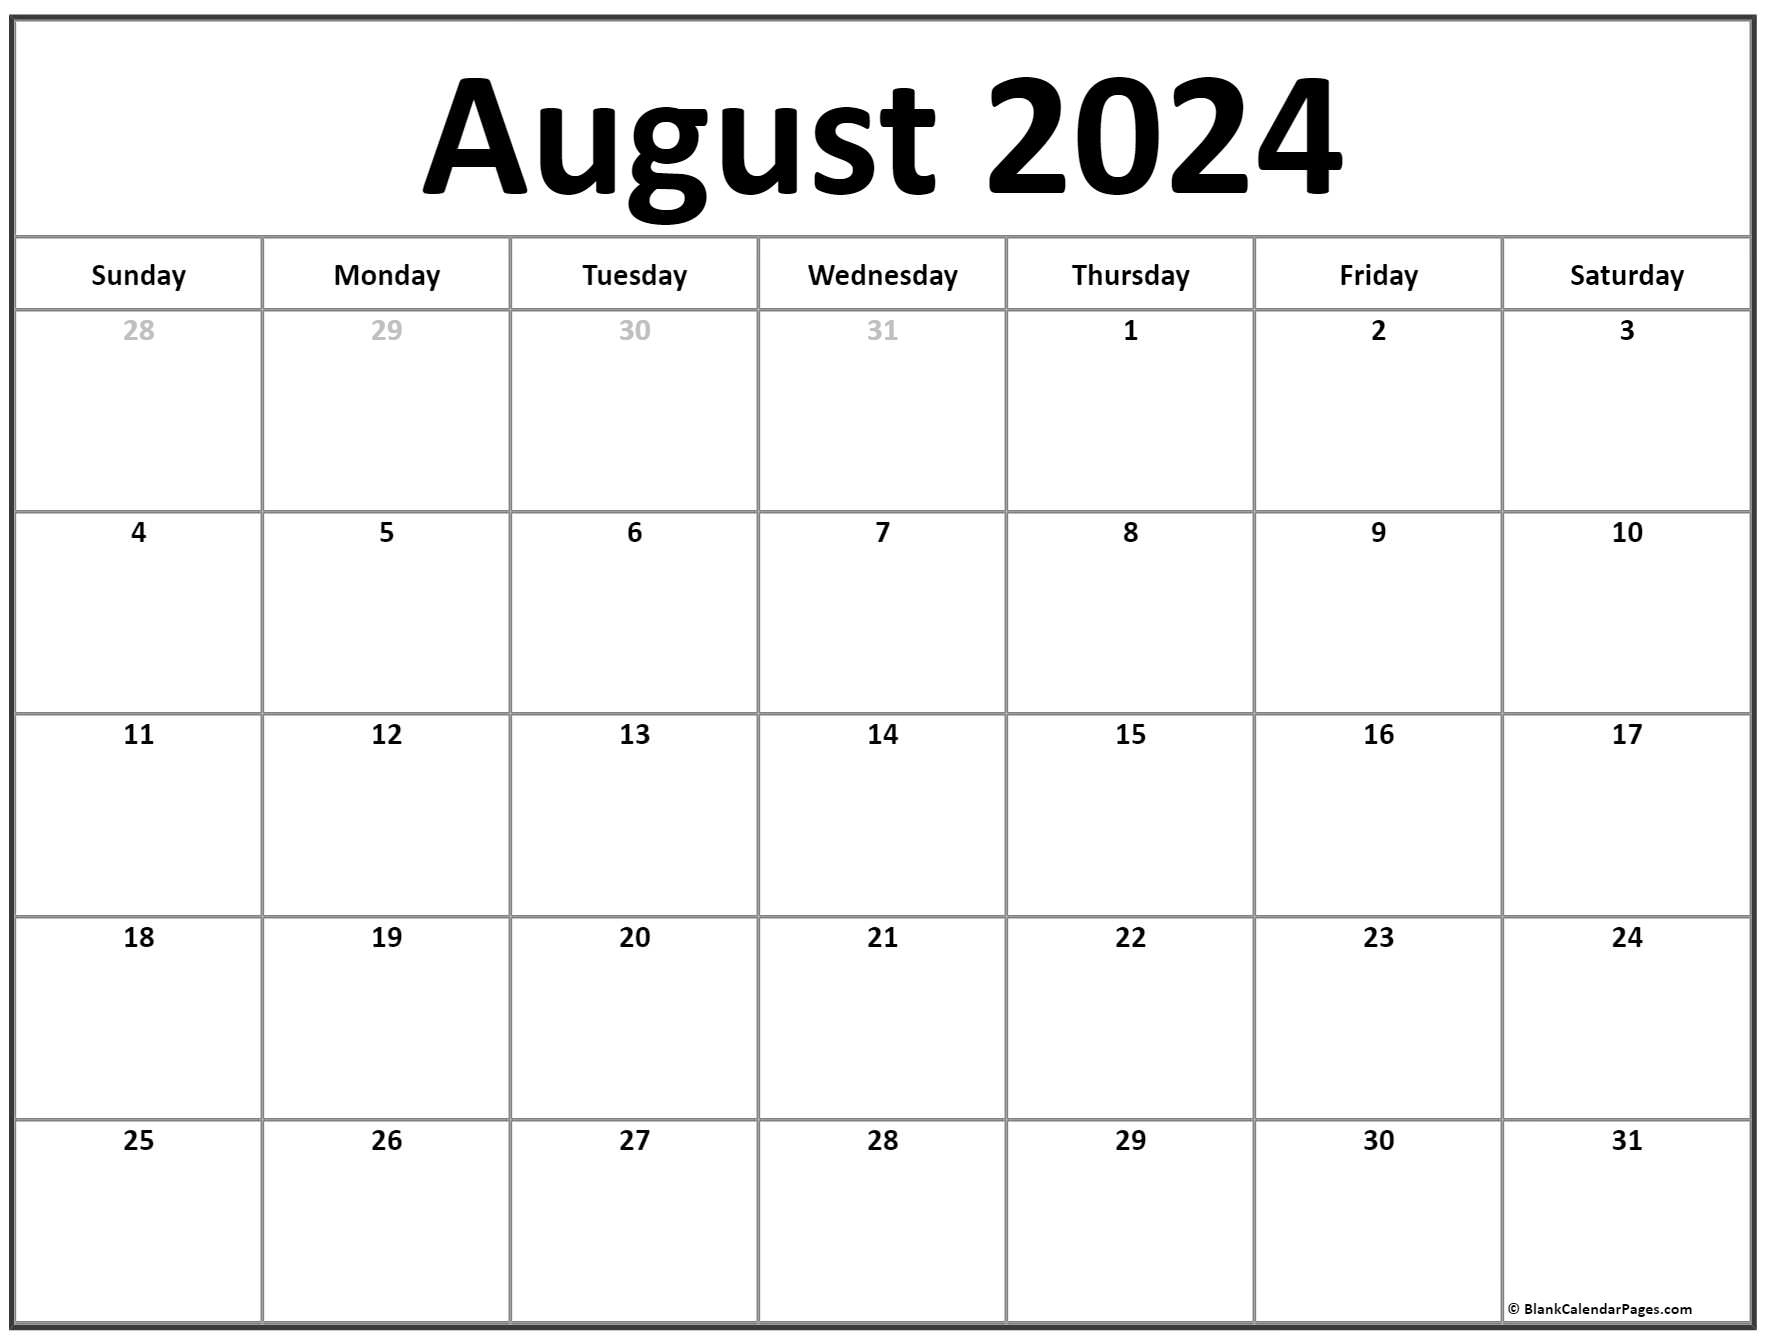 August 2024 Calendar | Free Printable Calendar | Printable Calendar 2024 August